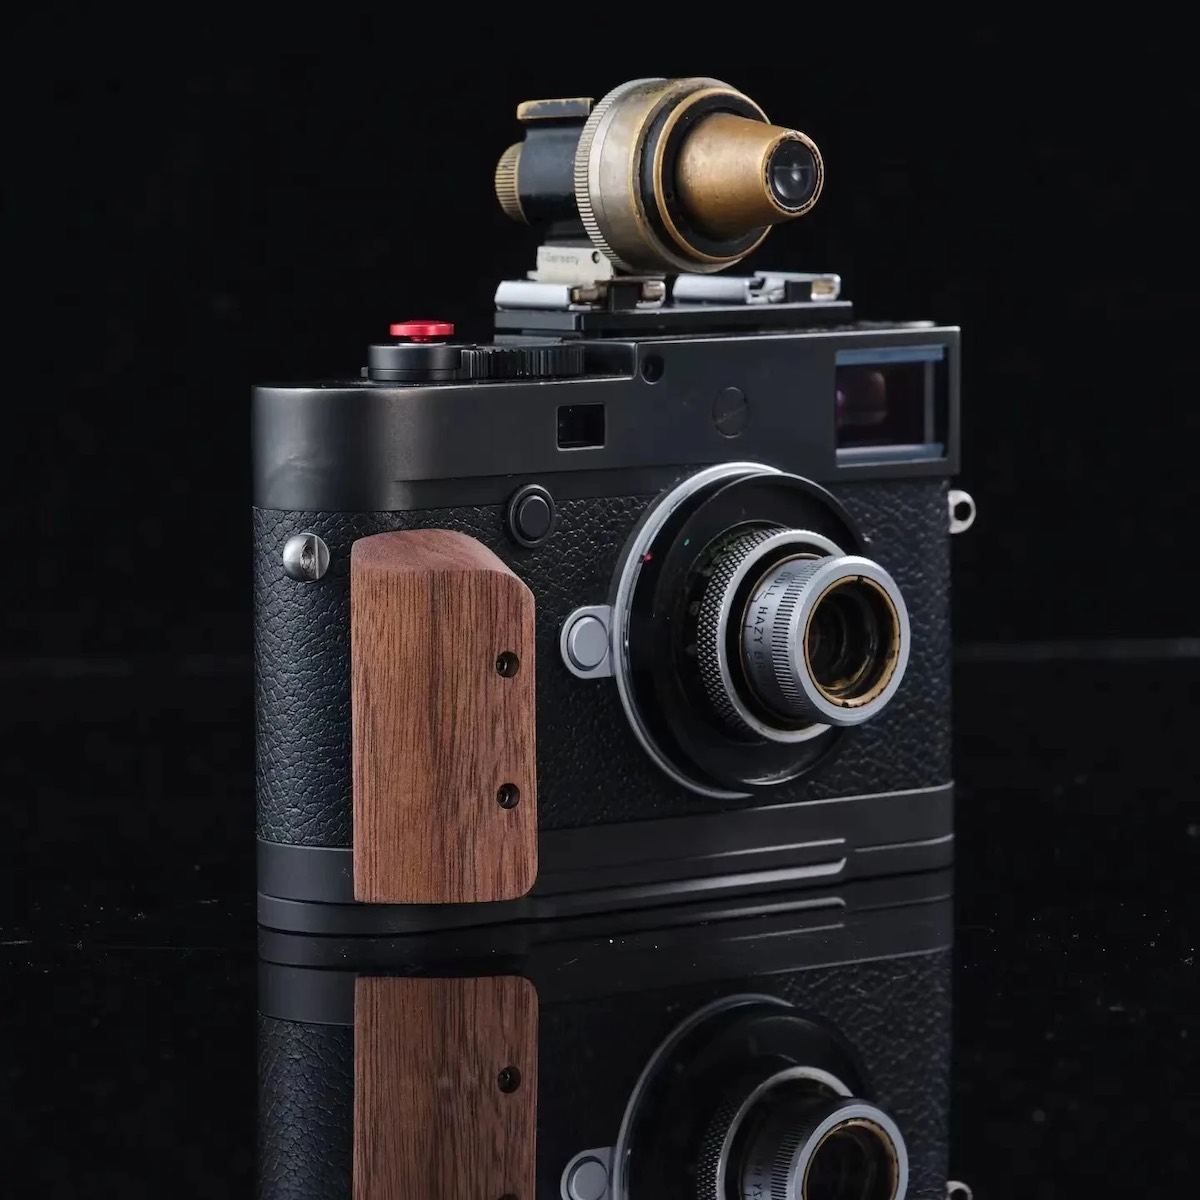 New: IDS modular grip for Leica M10 and M11 cameras - Leica Rumors